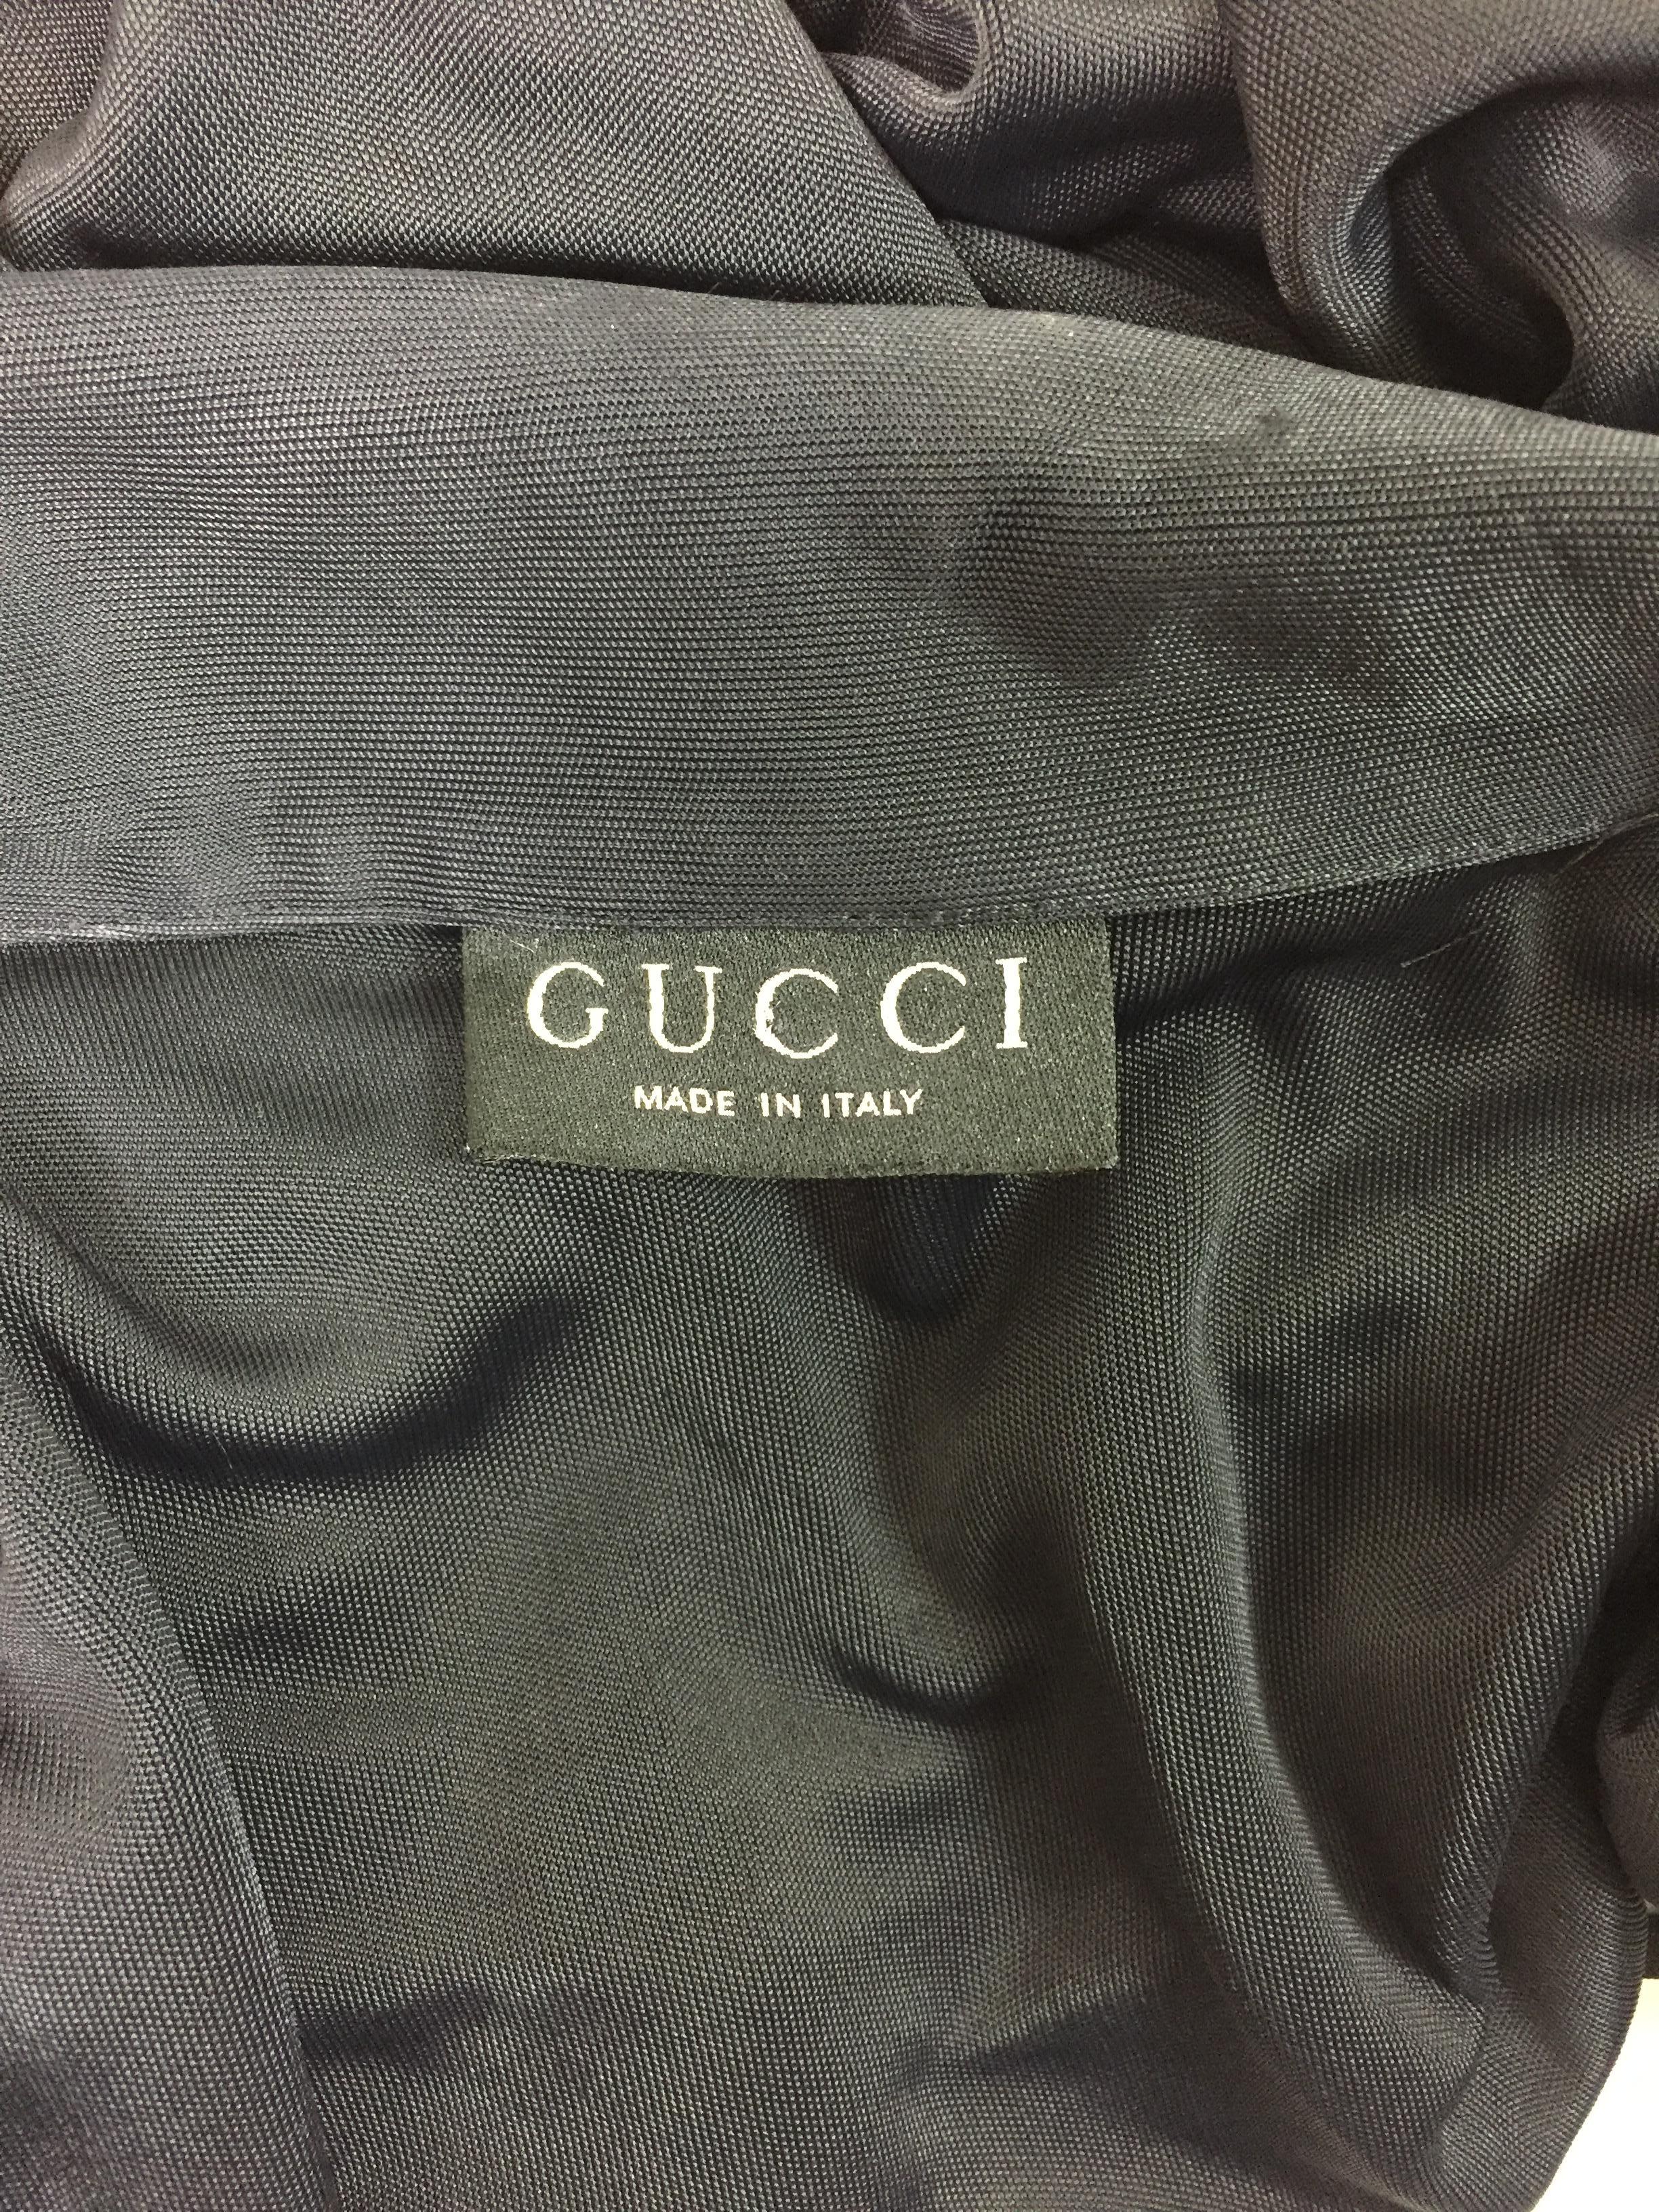 Women's S/S 1996 Gucci Tom Ford Documented Black Plunging Mini Dress W/ Logo Belt